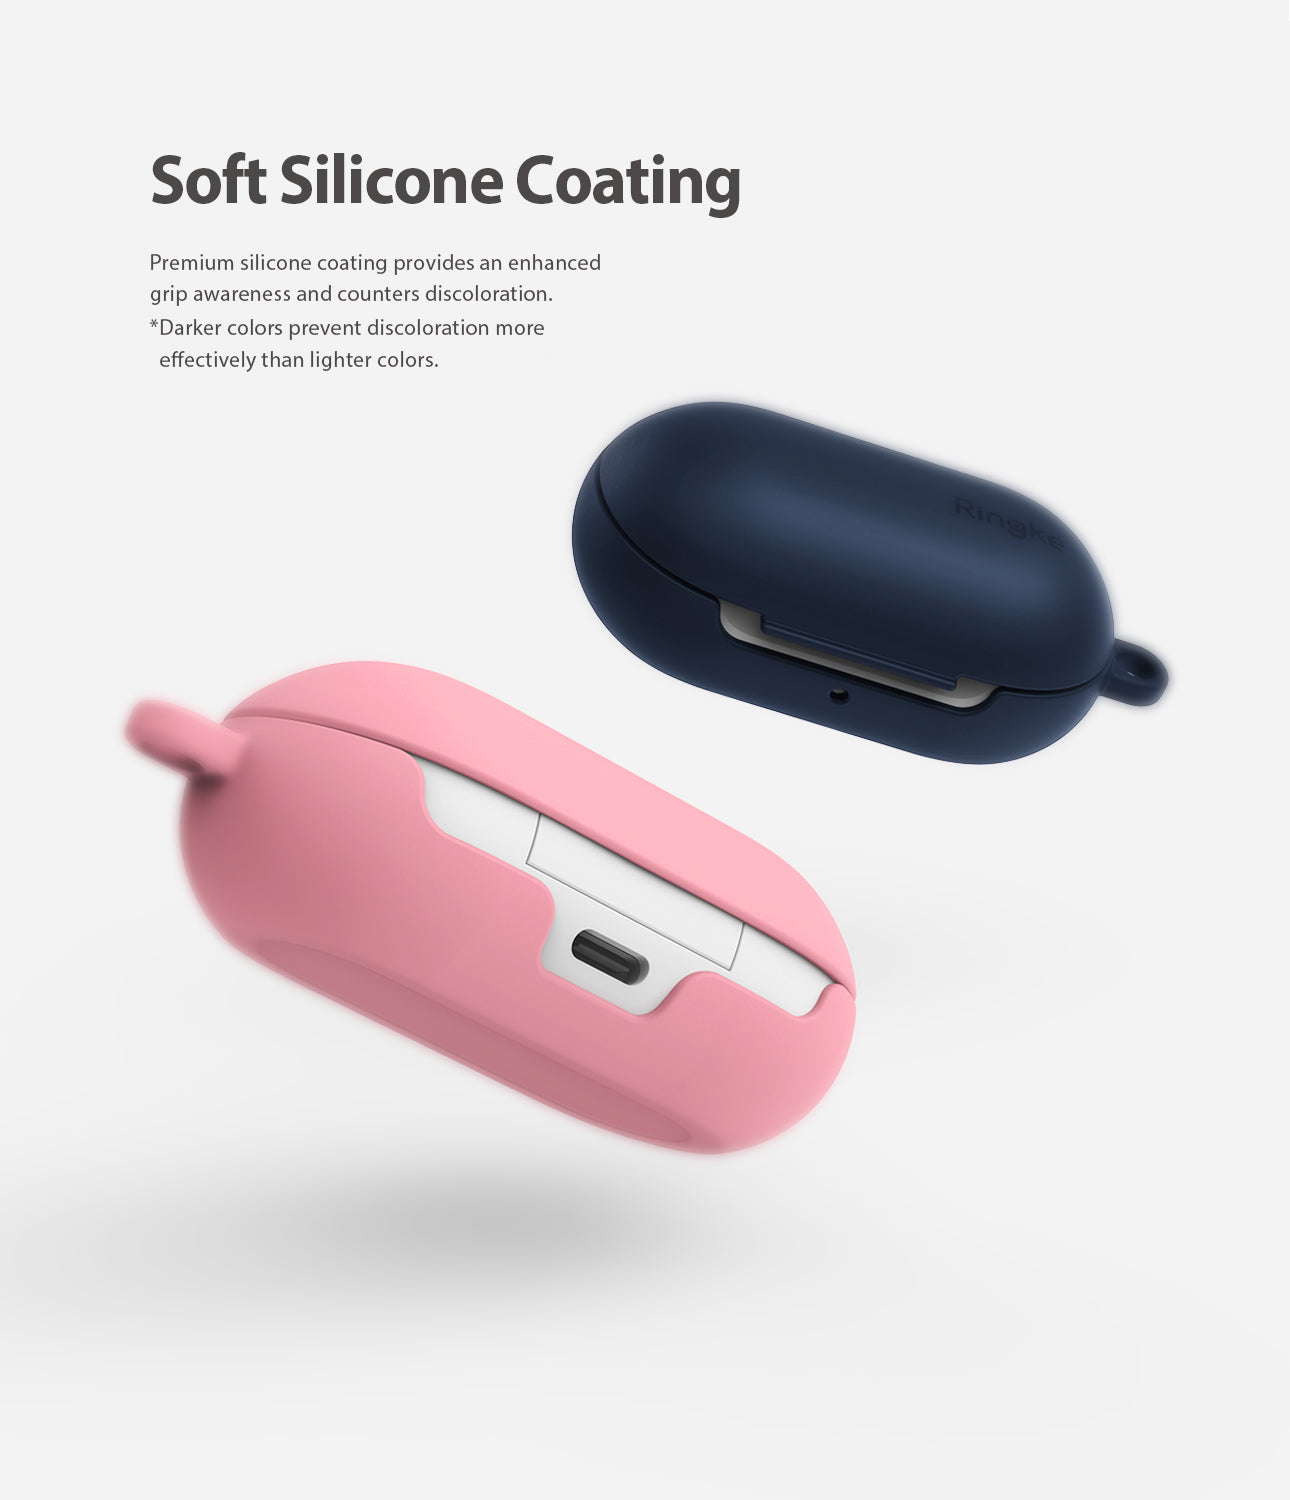 soft silicone coating provides enhanced grip 